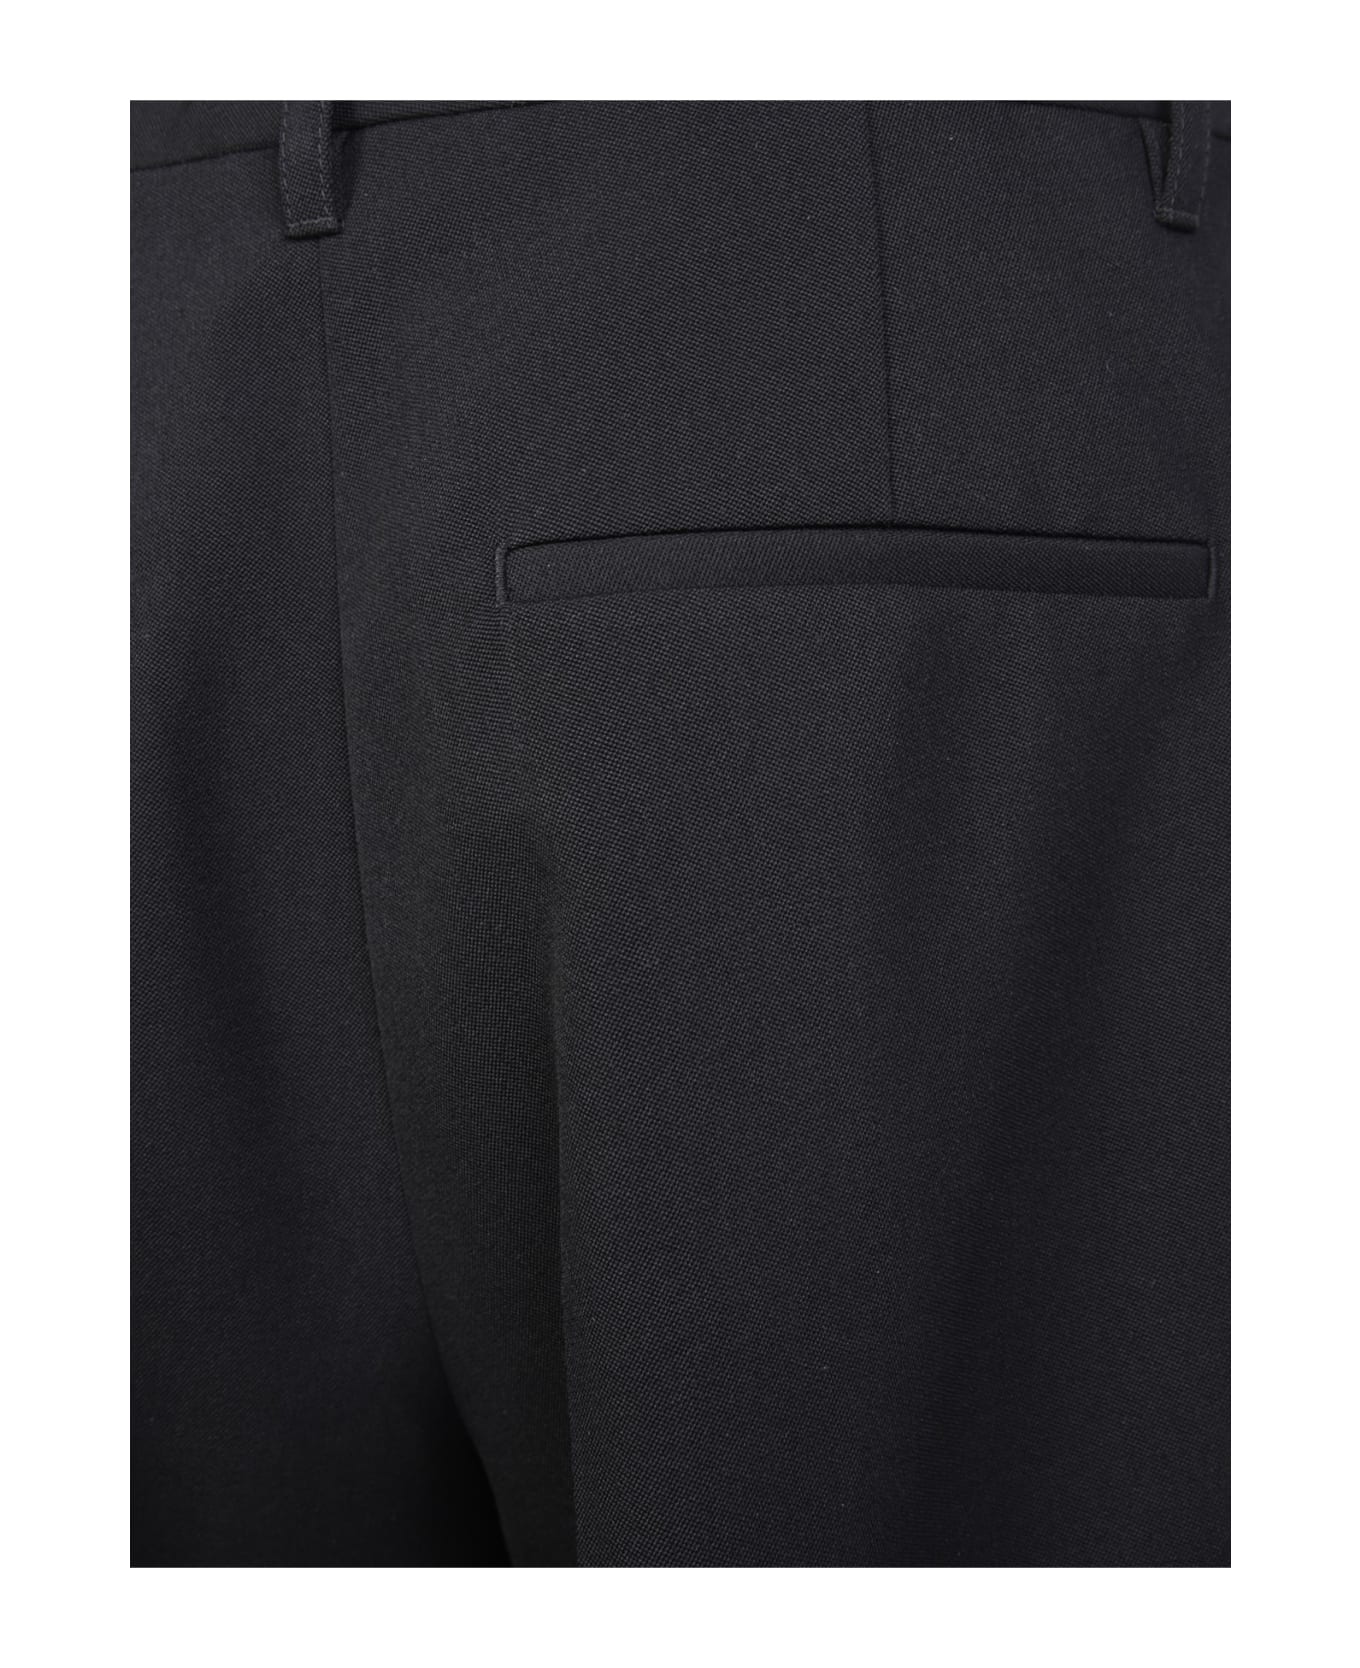 Burberry Wide-leg Black Trousers - Black ボトムス